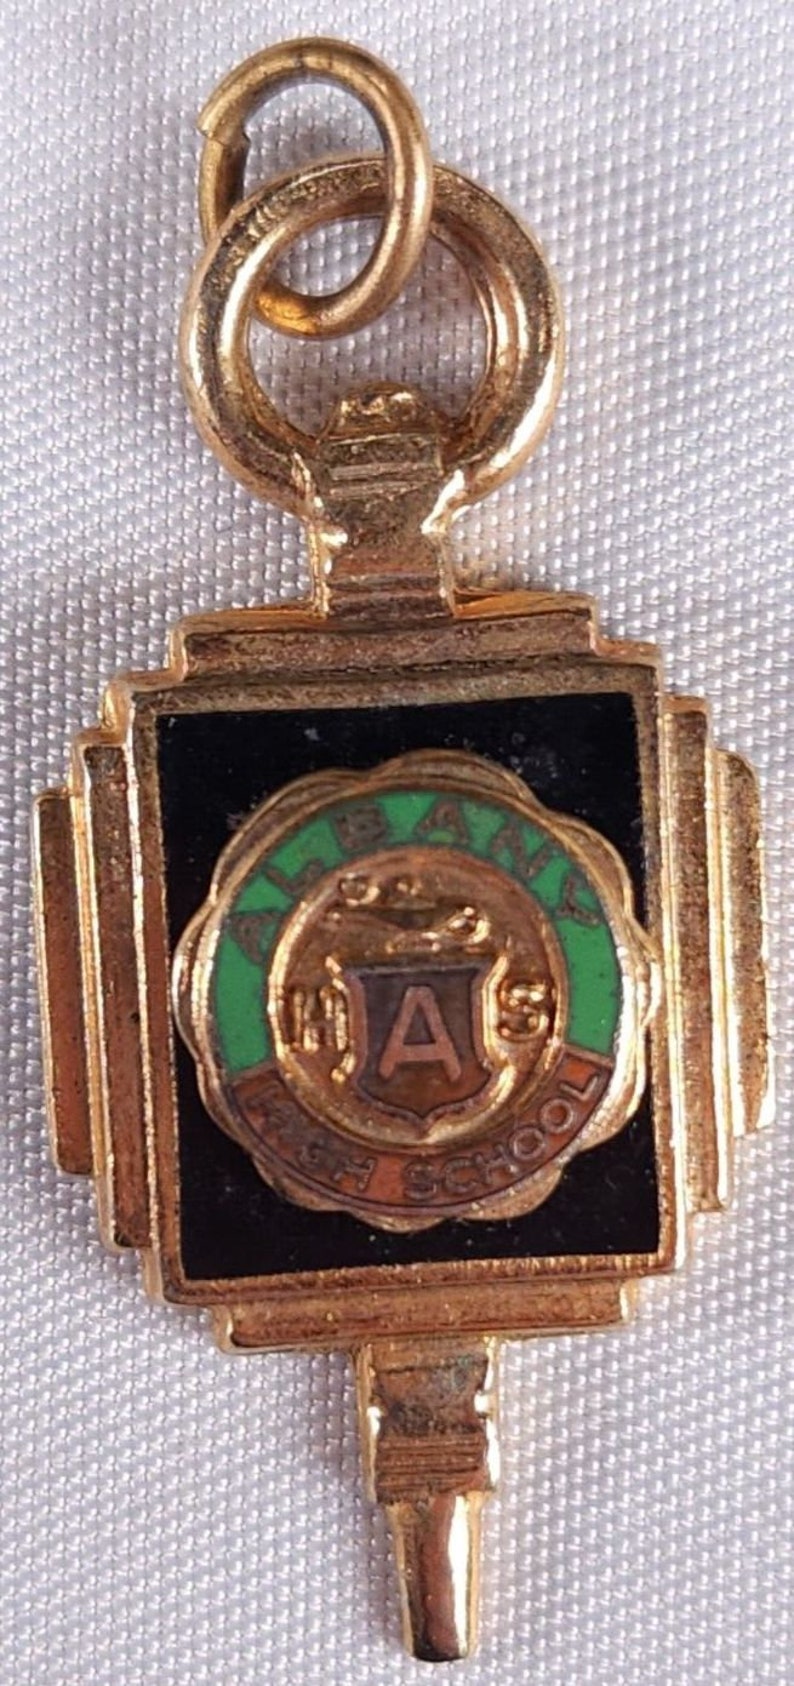 Antique Albany Georgia High School Vintage Graduation Pin Charm image 1